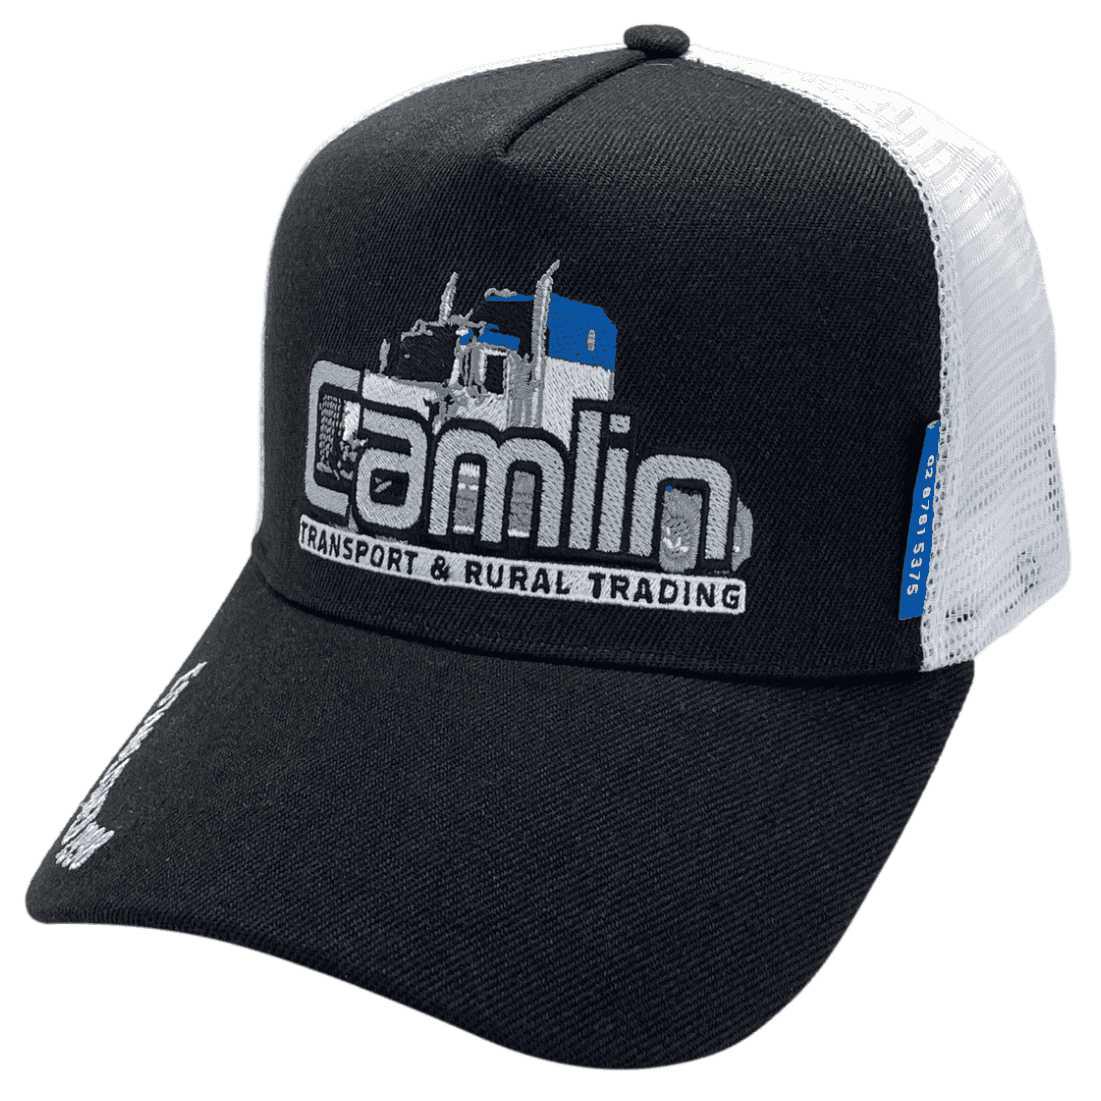 Camlin Transport and Rural Trading Tamworth NSW HP Midrange Aussie Trucker Hat with Australian Head Fit Crown Size Cool Under Pressure